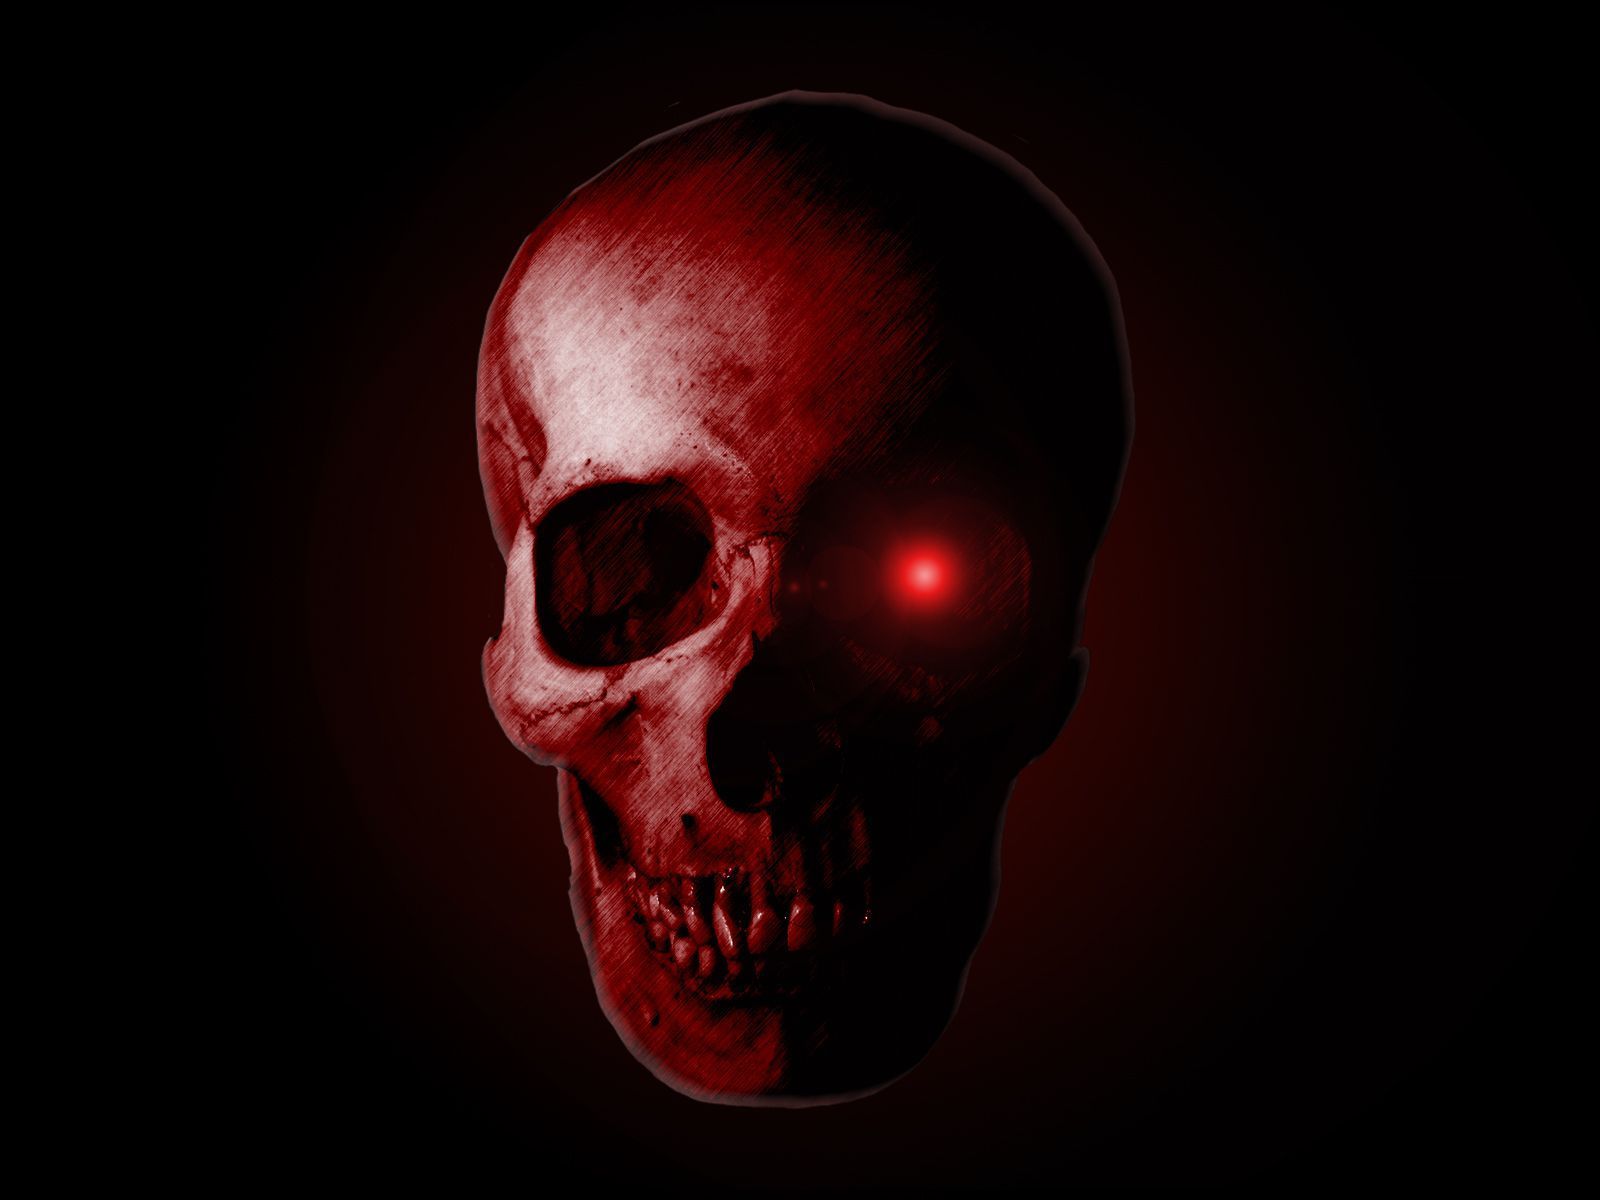 Wallpaper Evil skull Red and Black Backgrounds